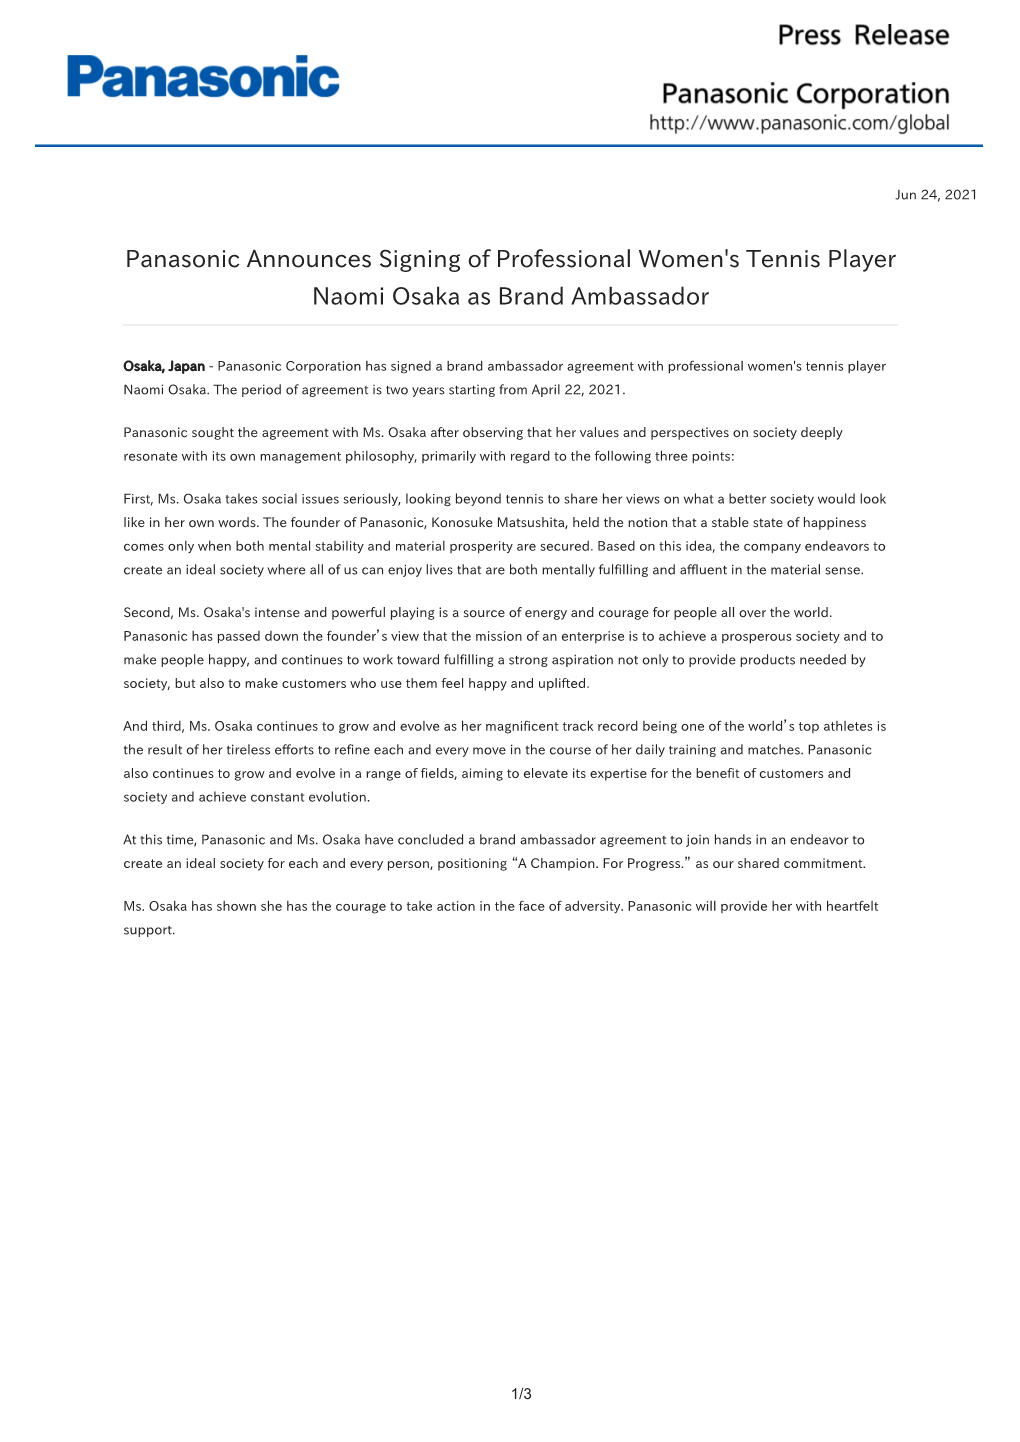 Panasonic Announces Signing of Professional Women's Tennis Player Naomi Osaka As Brand Ambassador